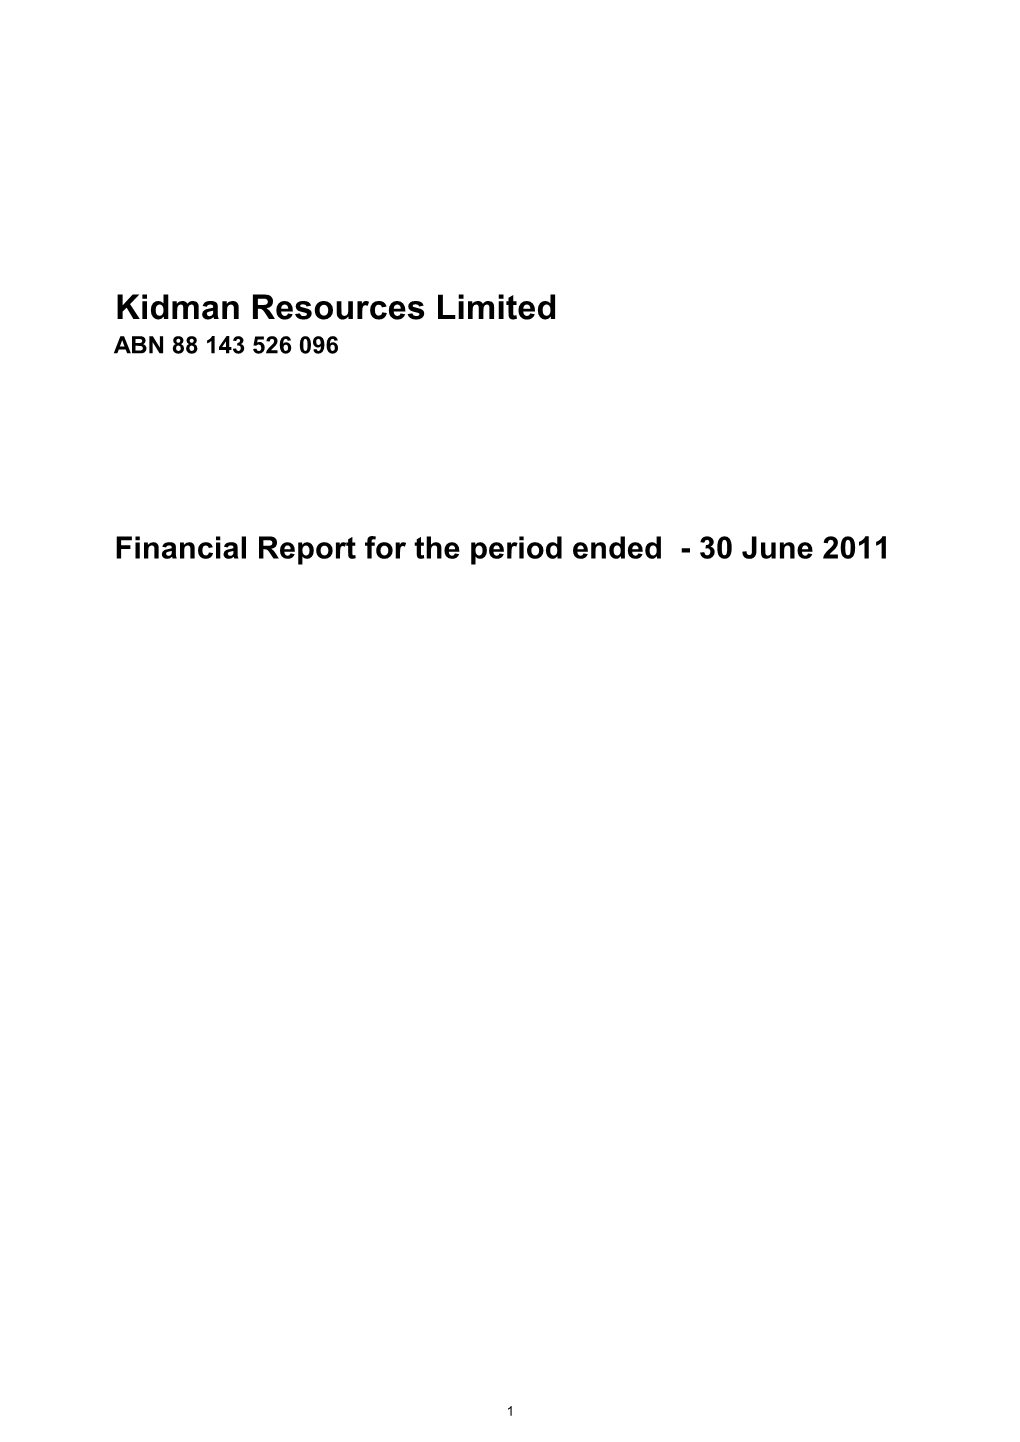 Kidman Resources Limited ABN 88 143 526 096